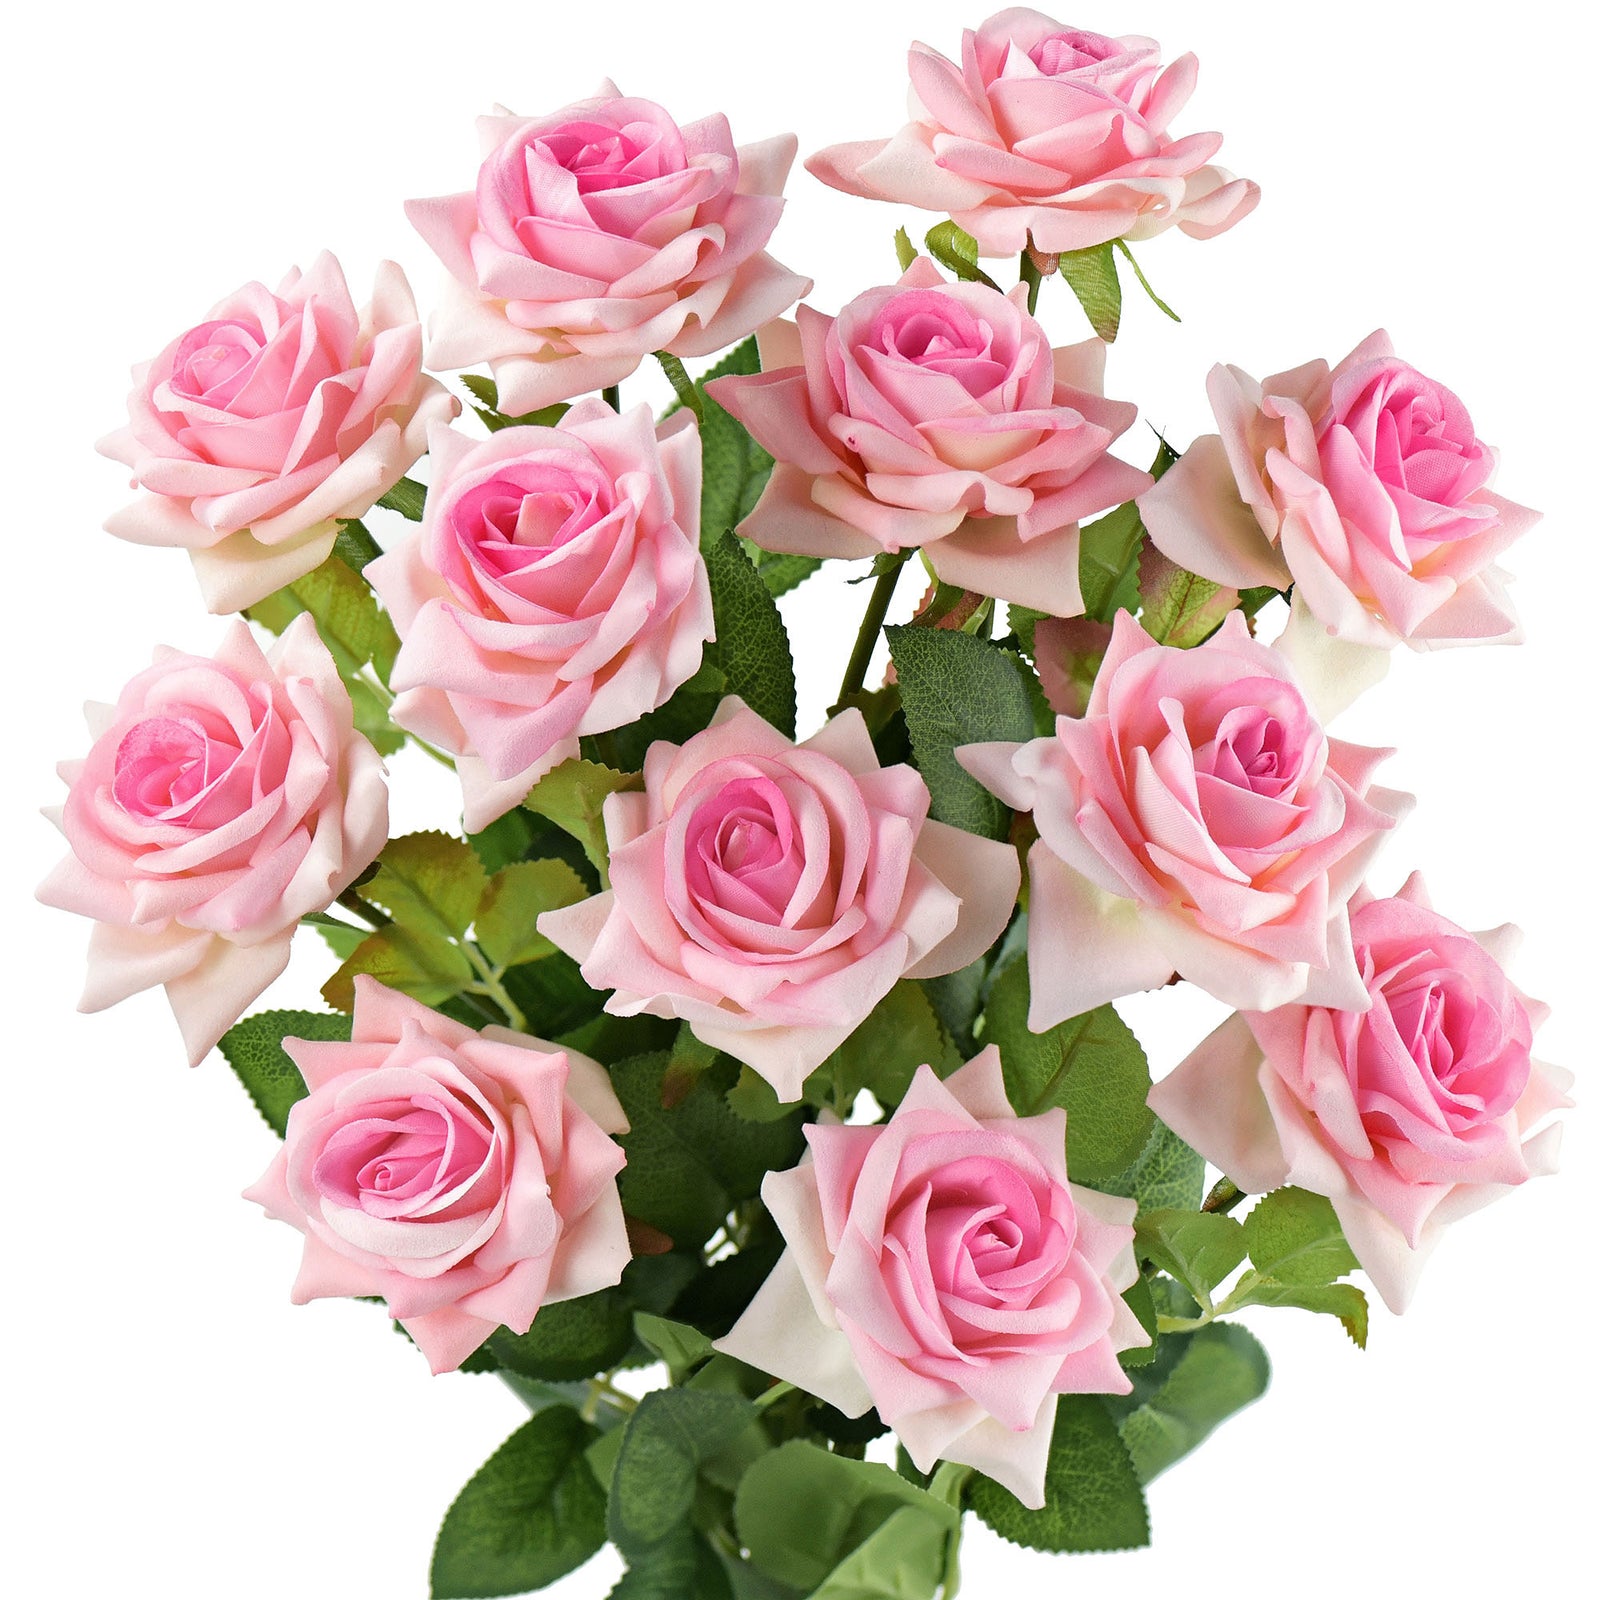 FiveSeasonStuff Pale Violet Pink Roses Artificial Flowers Bridal, Home Décor, Adds a Luxurious Touch (12 Stems)